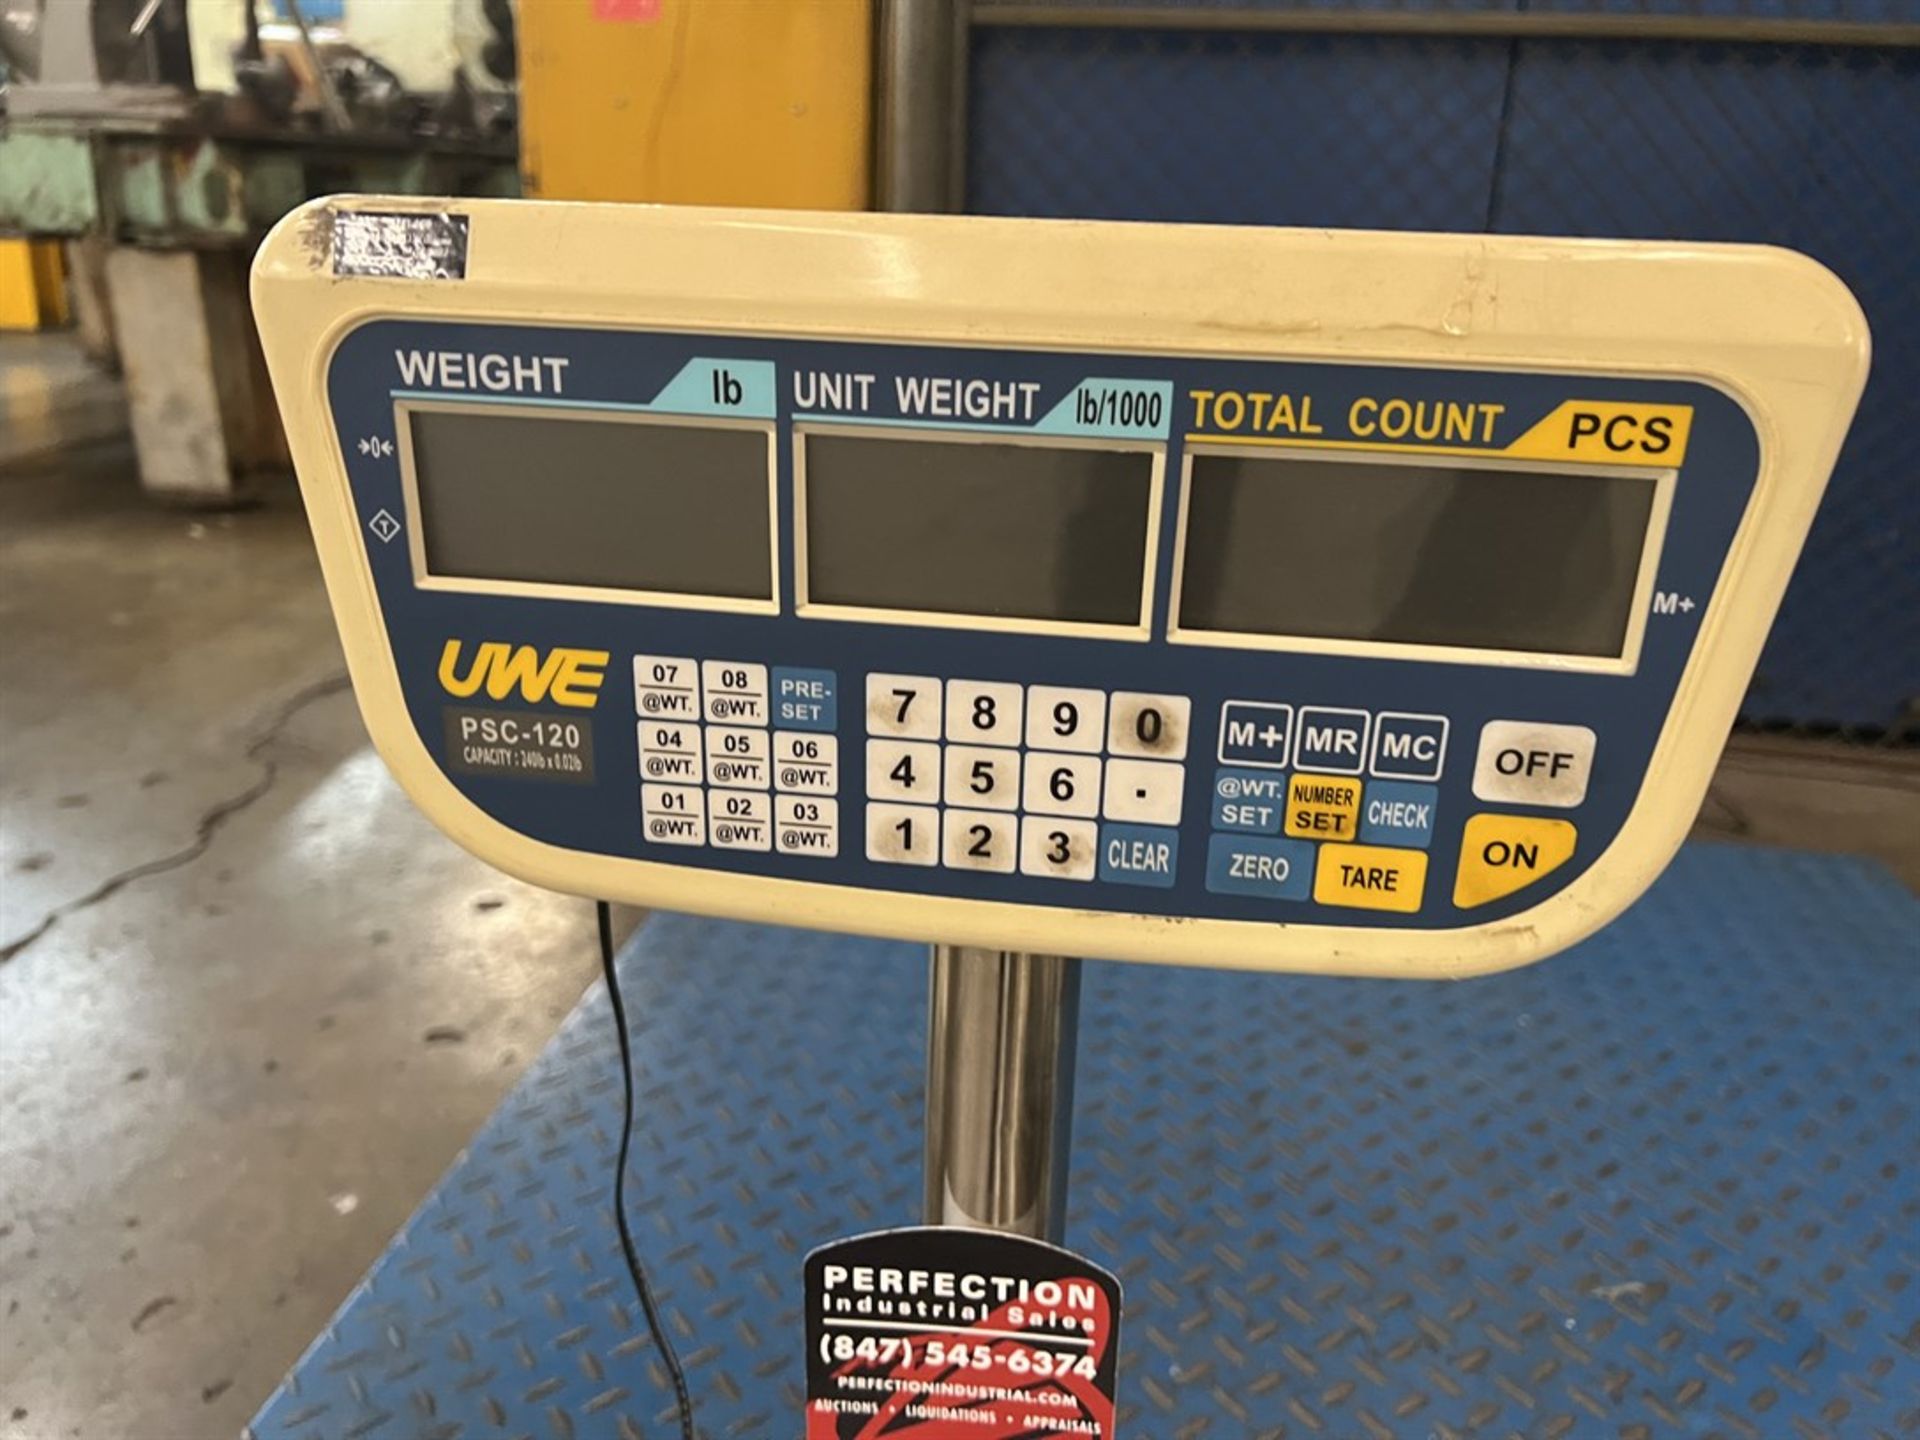 UWE PSC-120 Benchtop Platform Scale/Parts Counter, 240 Lb Capacity (Machine Shop) - Image 3 of 5